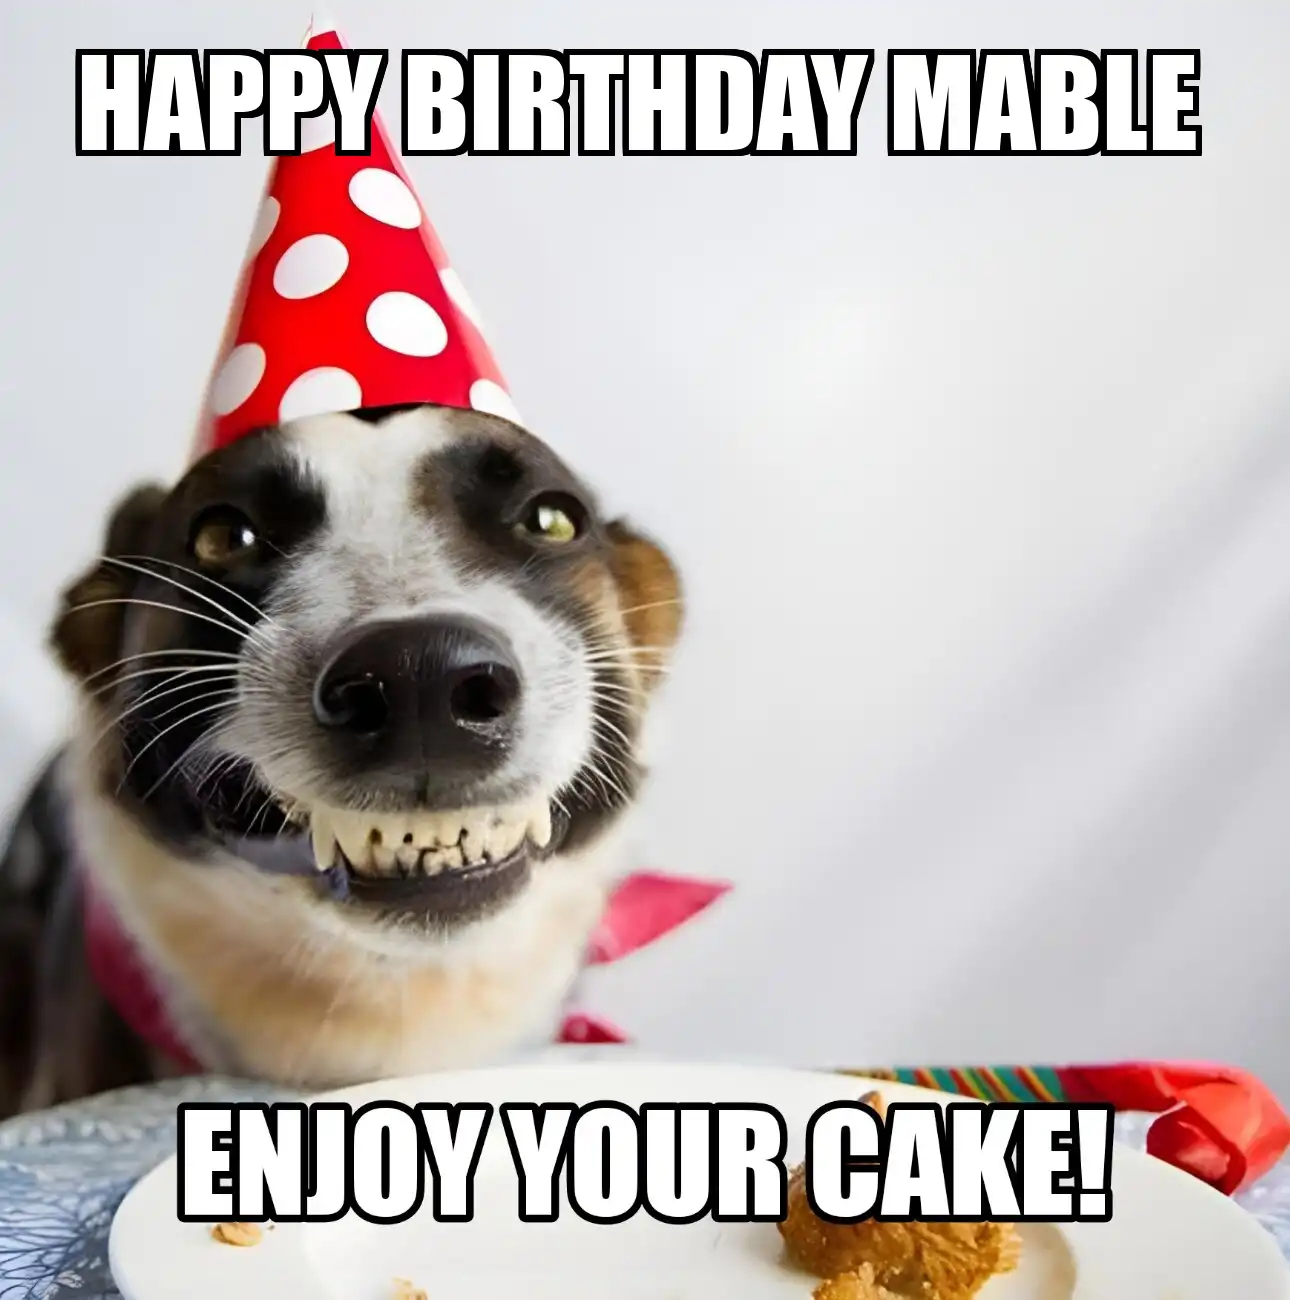 Happy Birthday Mable Enjoy Your Cake Dog Meme